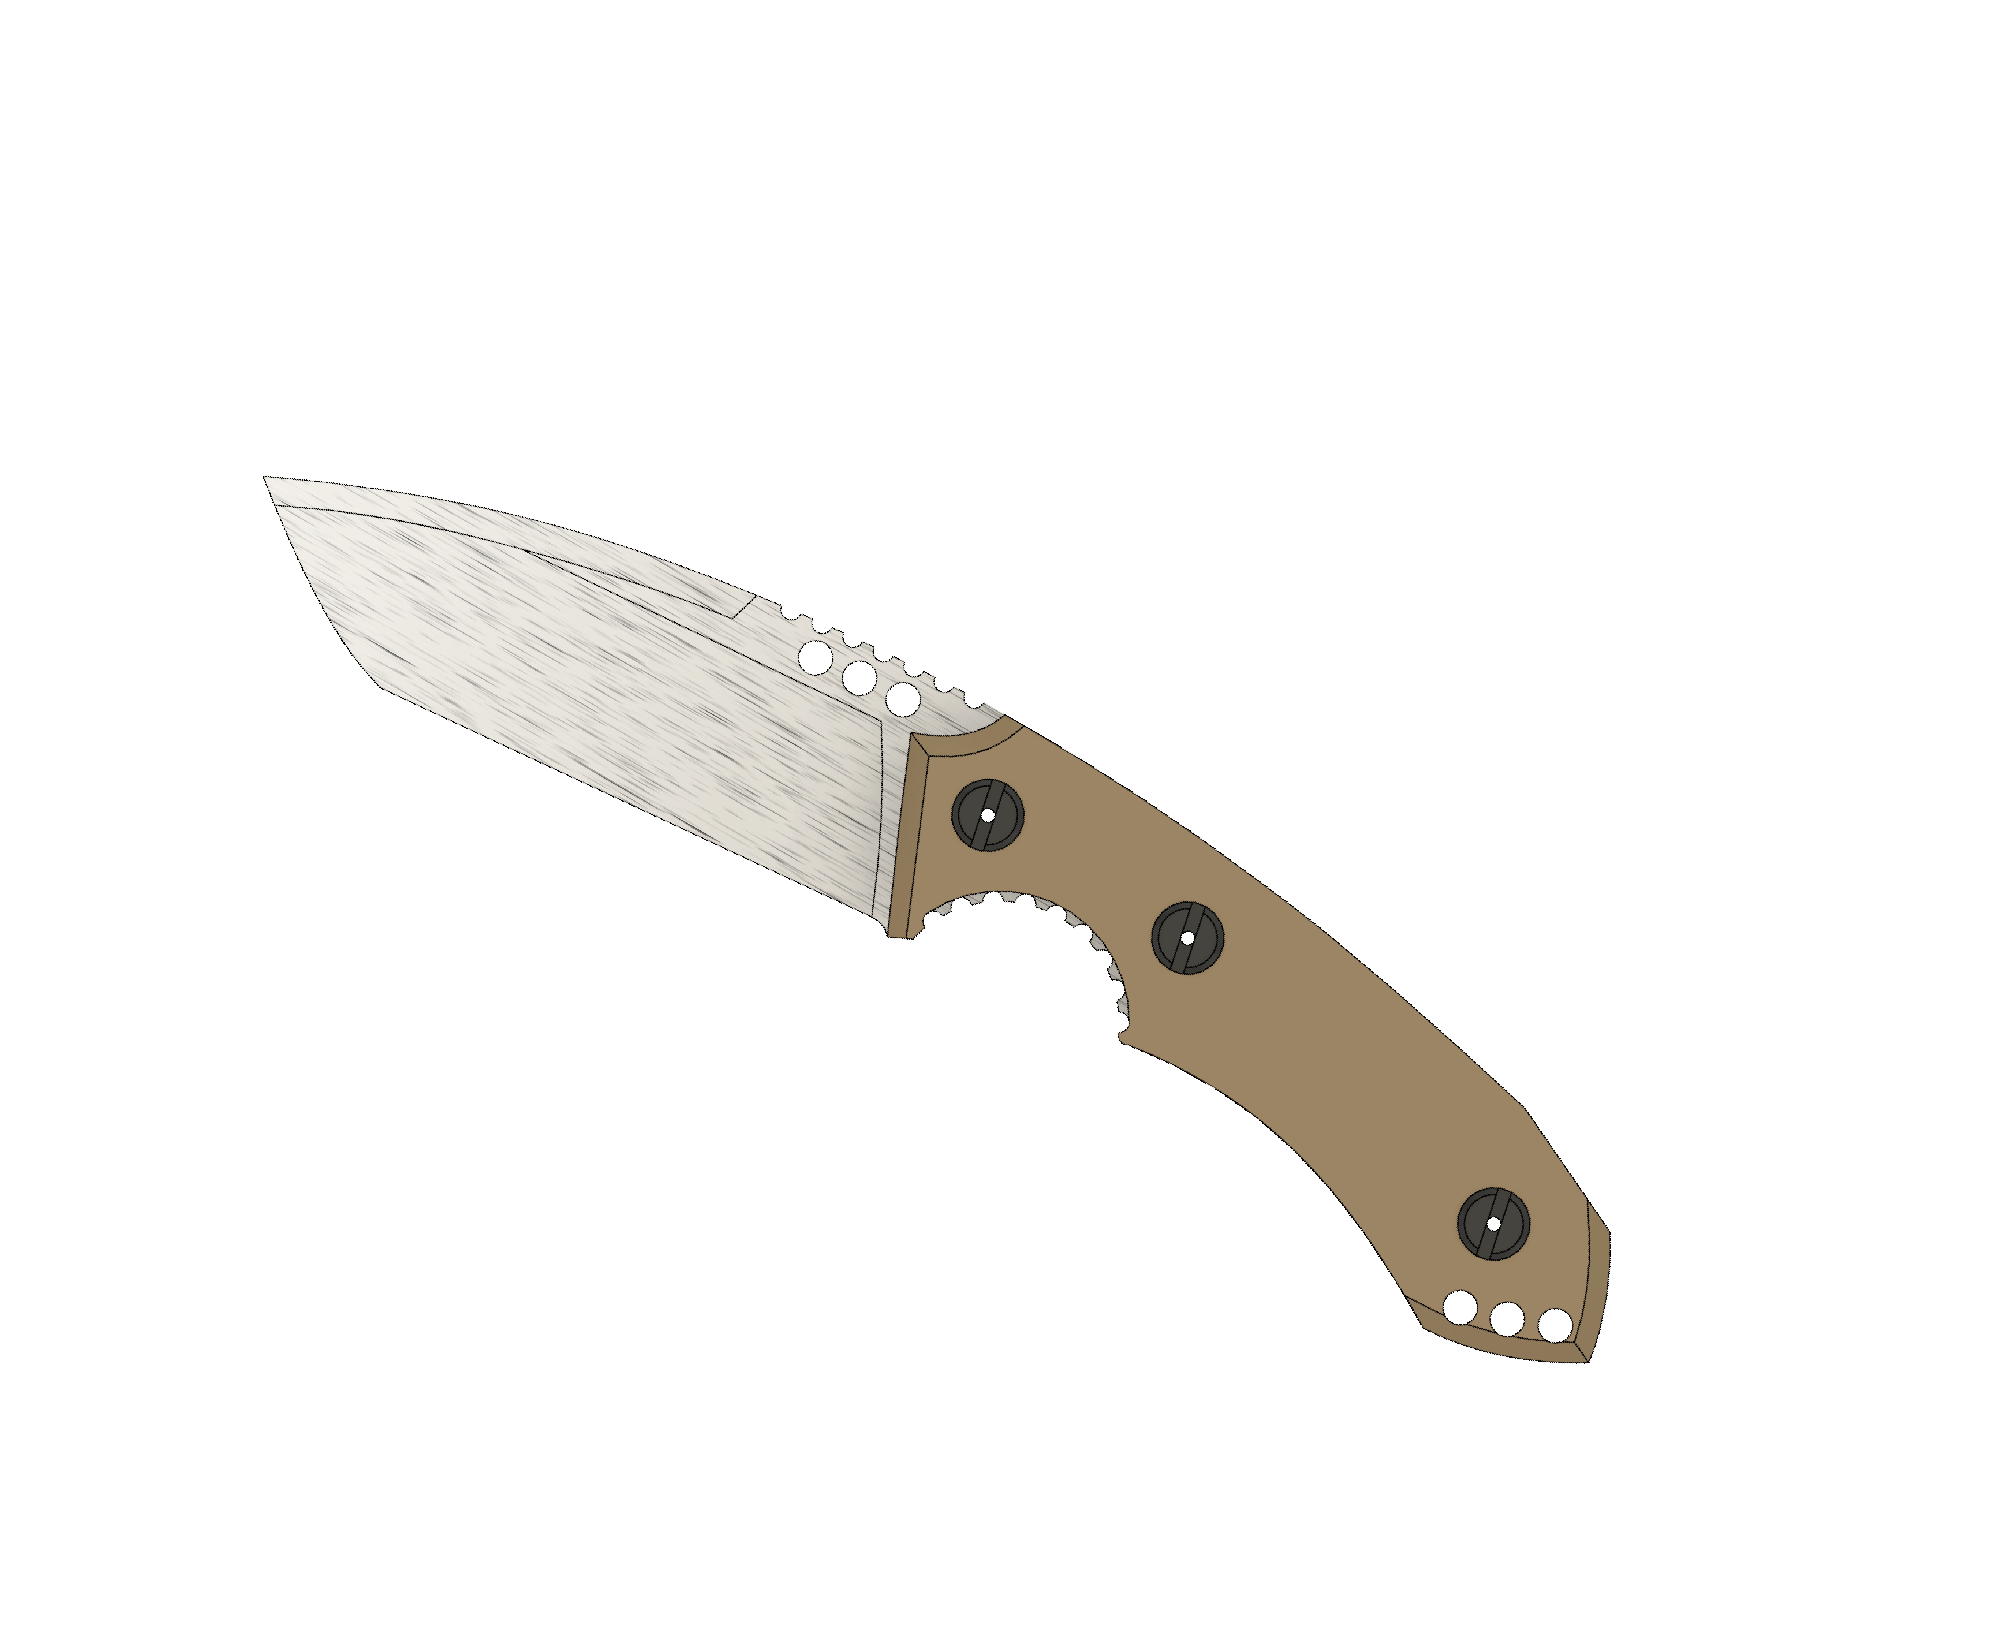 ATRAX BOA Tactical Knife - SNAKE SKIN PATERN ON HANDLE